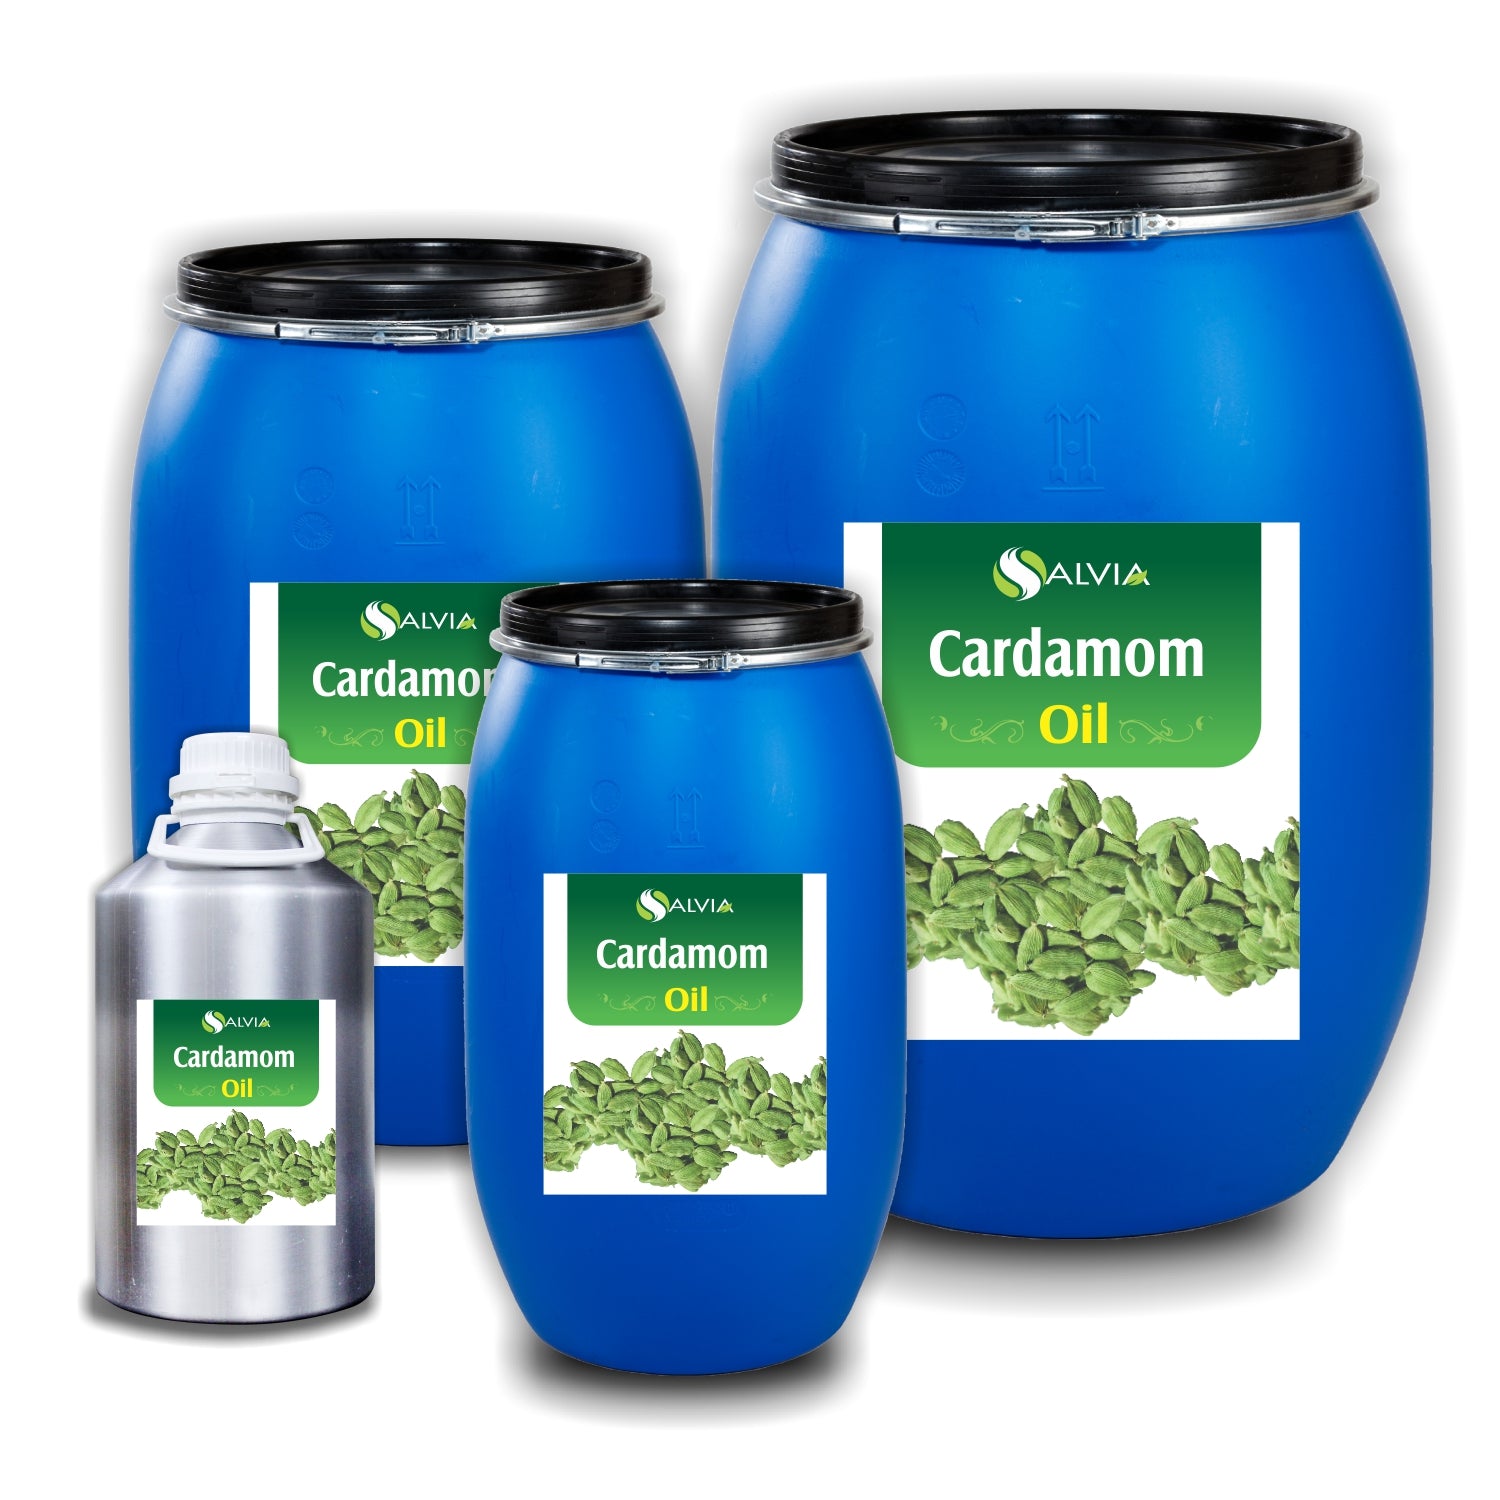 Salvia Natural Essential Oils 10kg Cardamom Oil (Elettaria cardamomum) 100% Natural Pure Essential Oil